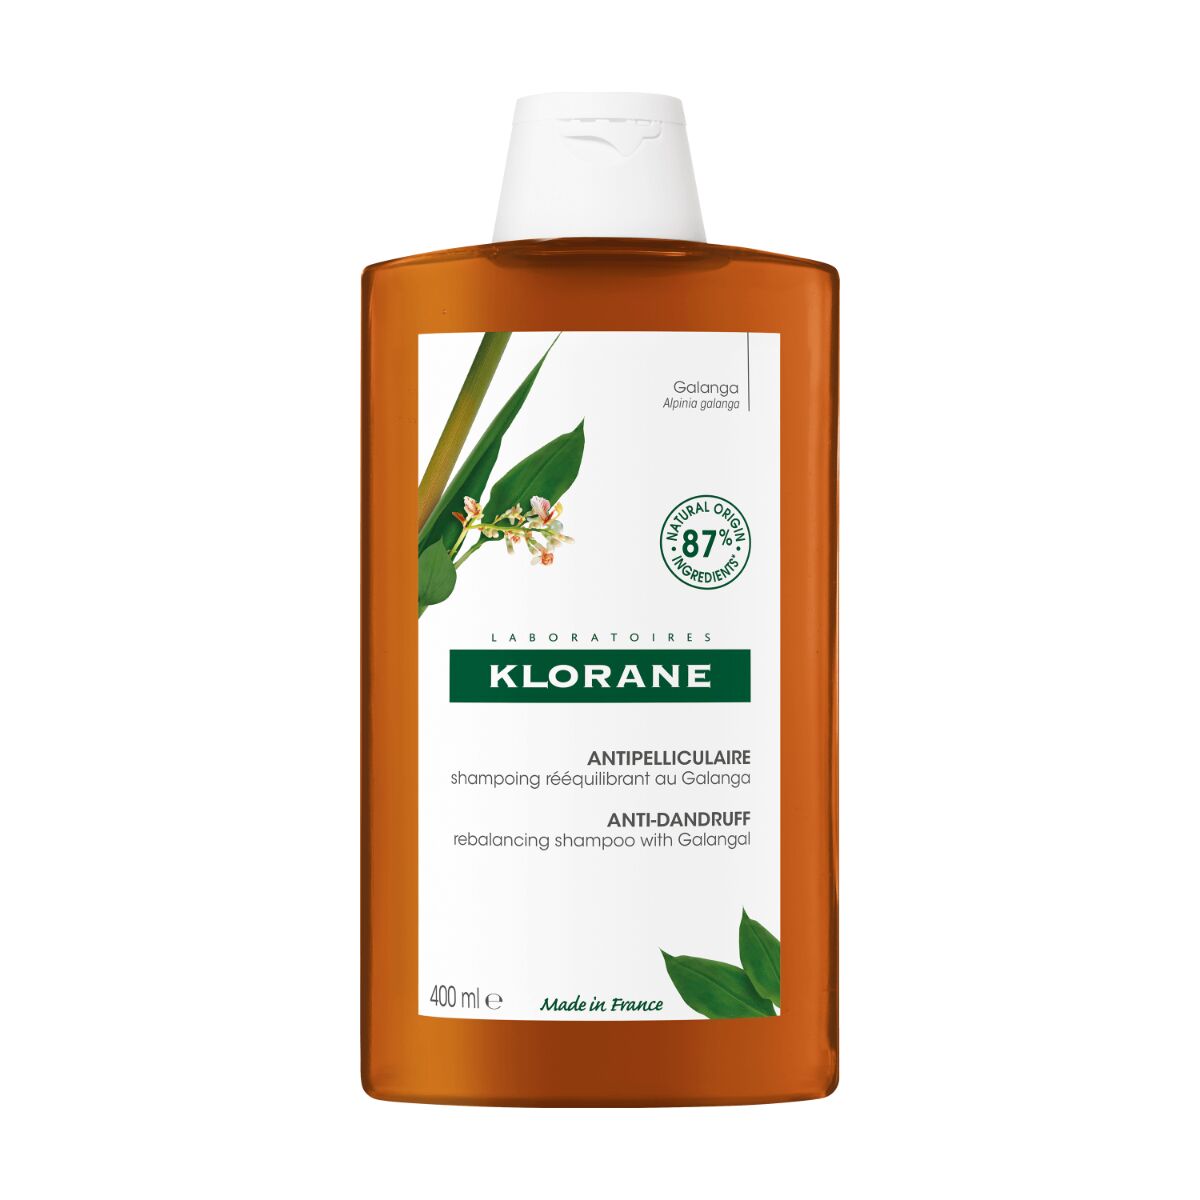 Klorane Shampoo Riequilibrante Antiforfora con Galanga 400ml